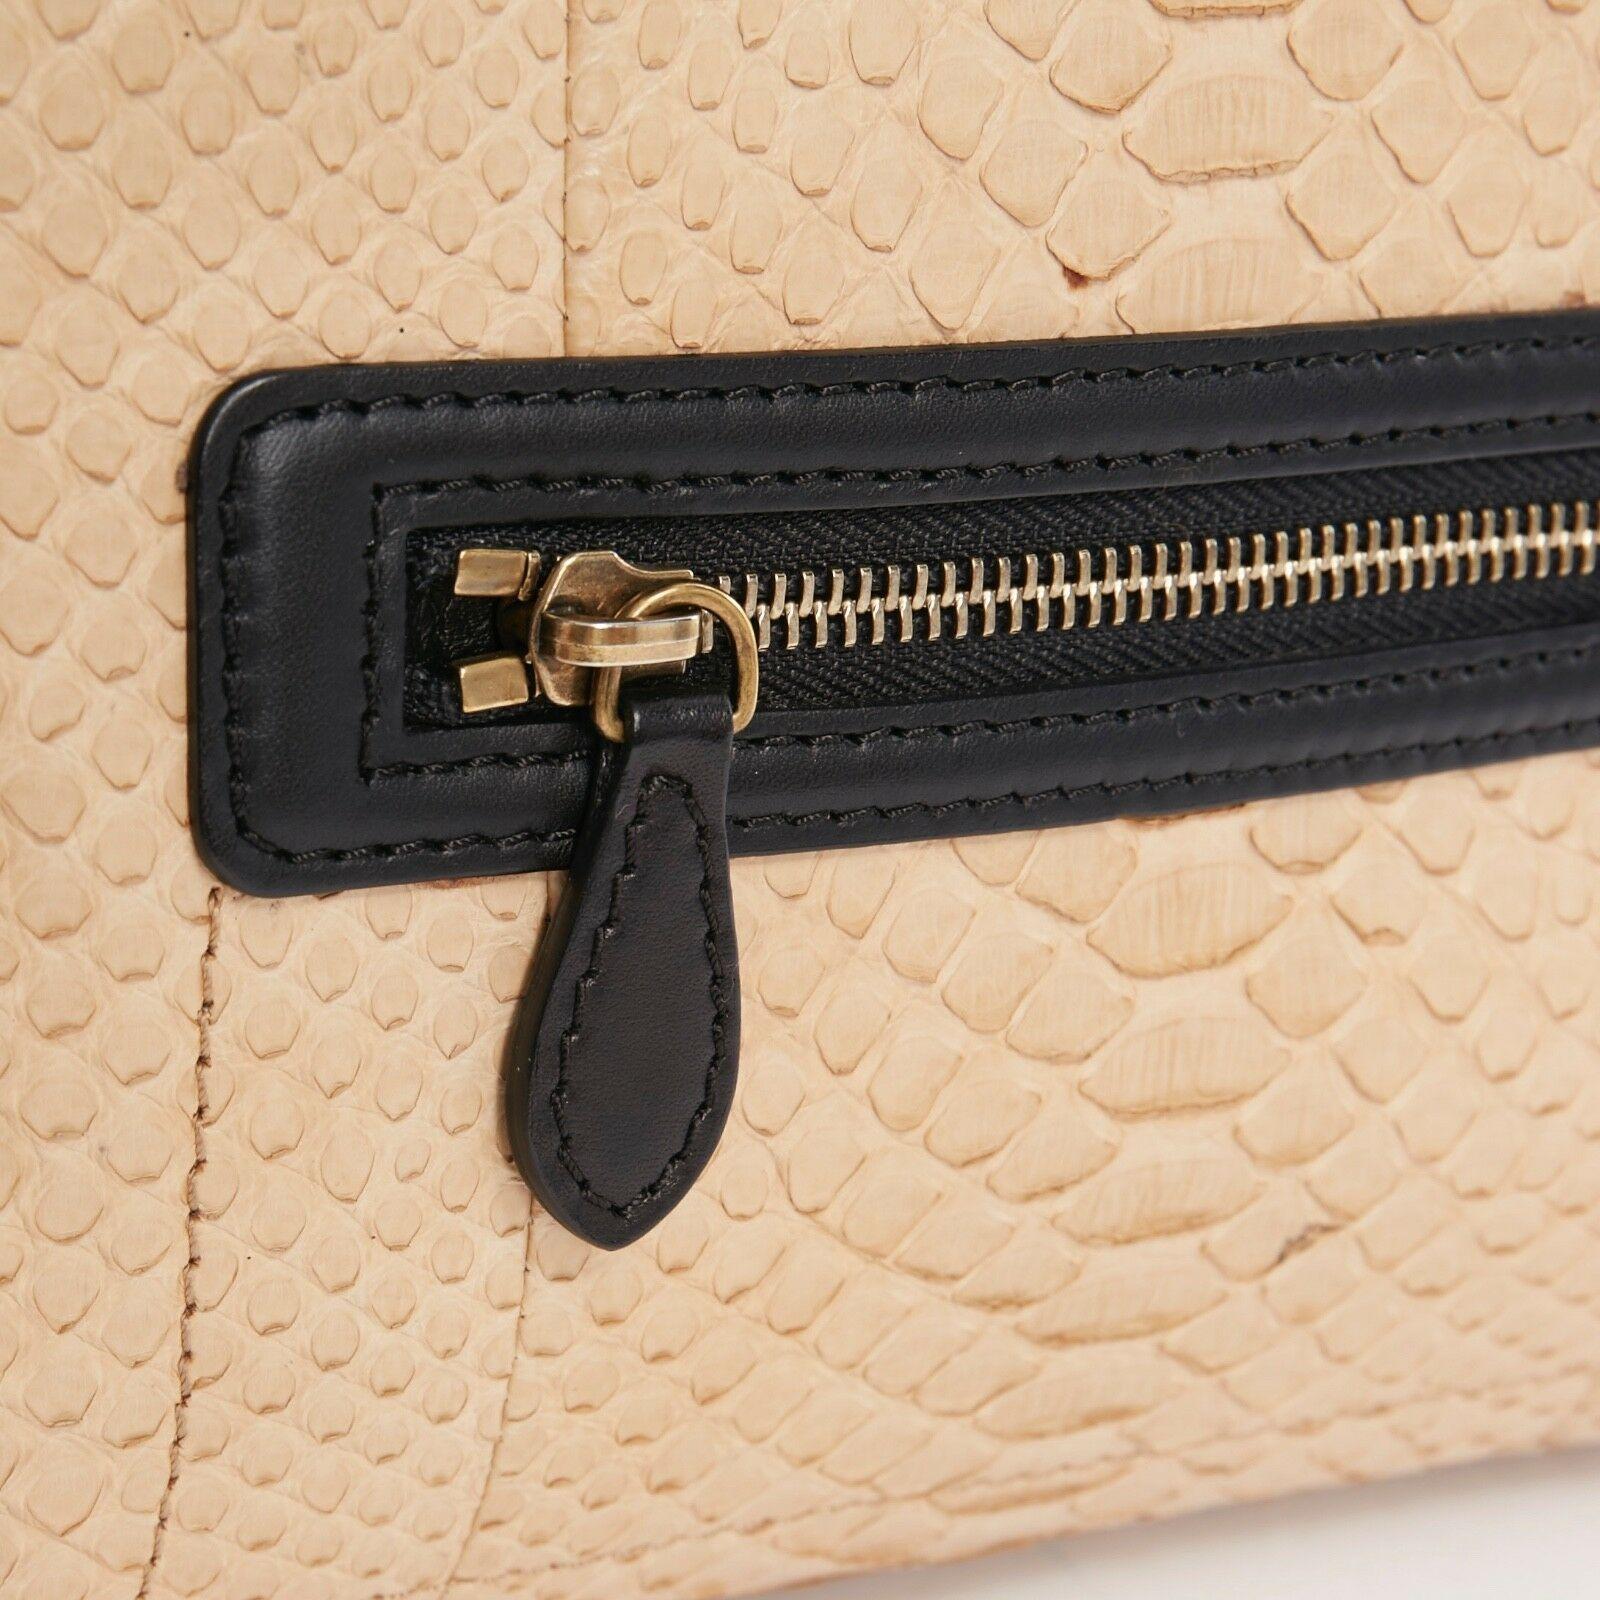 Women's CELINE PHOEBE PHILO Luggage Tote Small beige python black leather trim bag